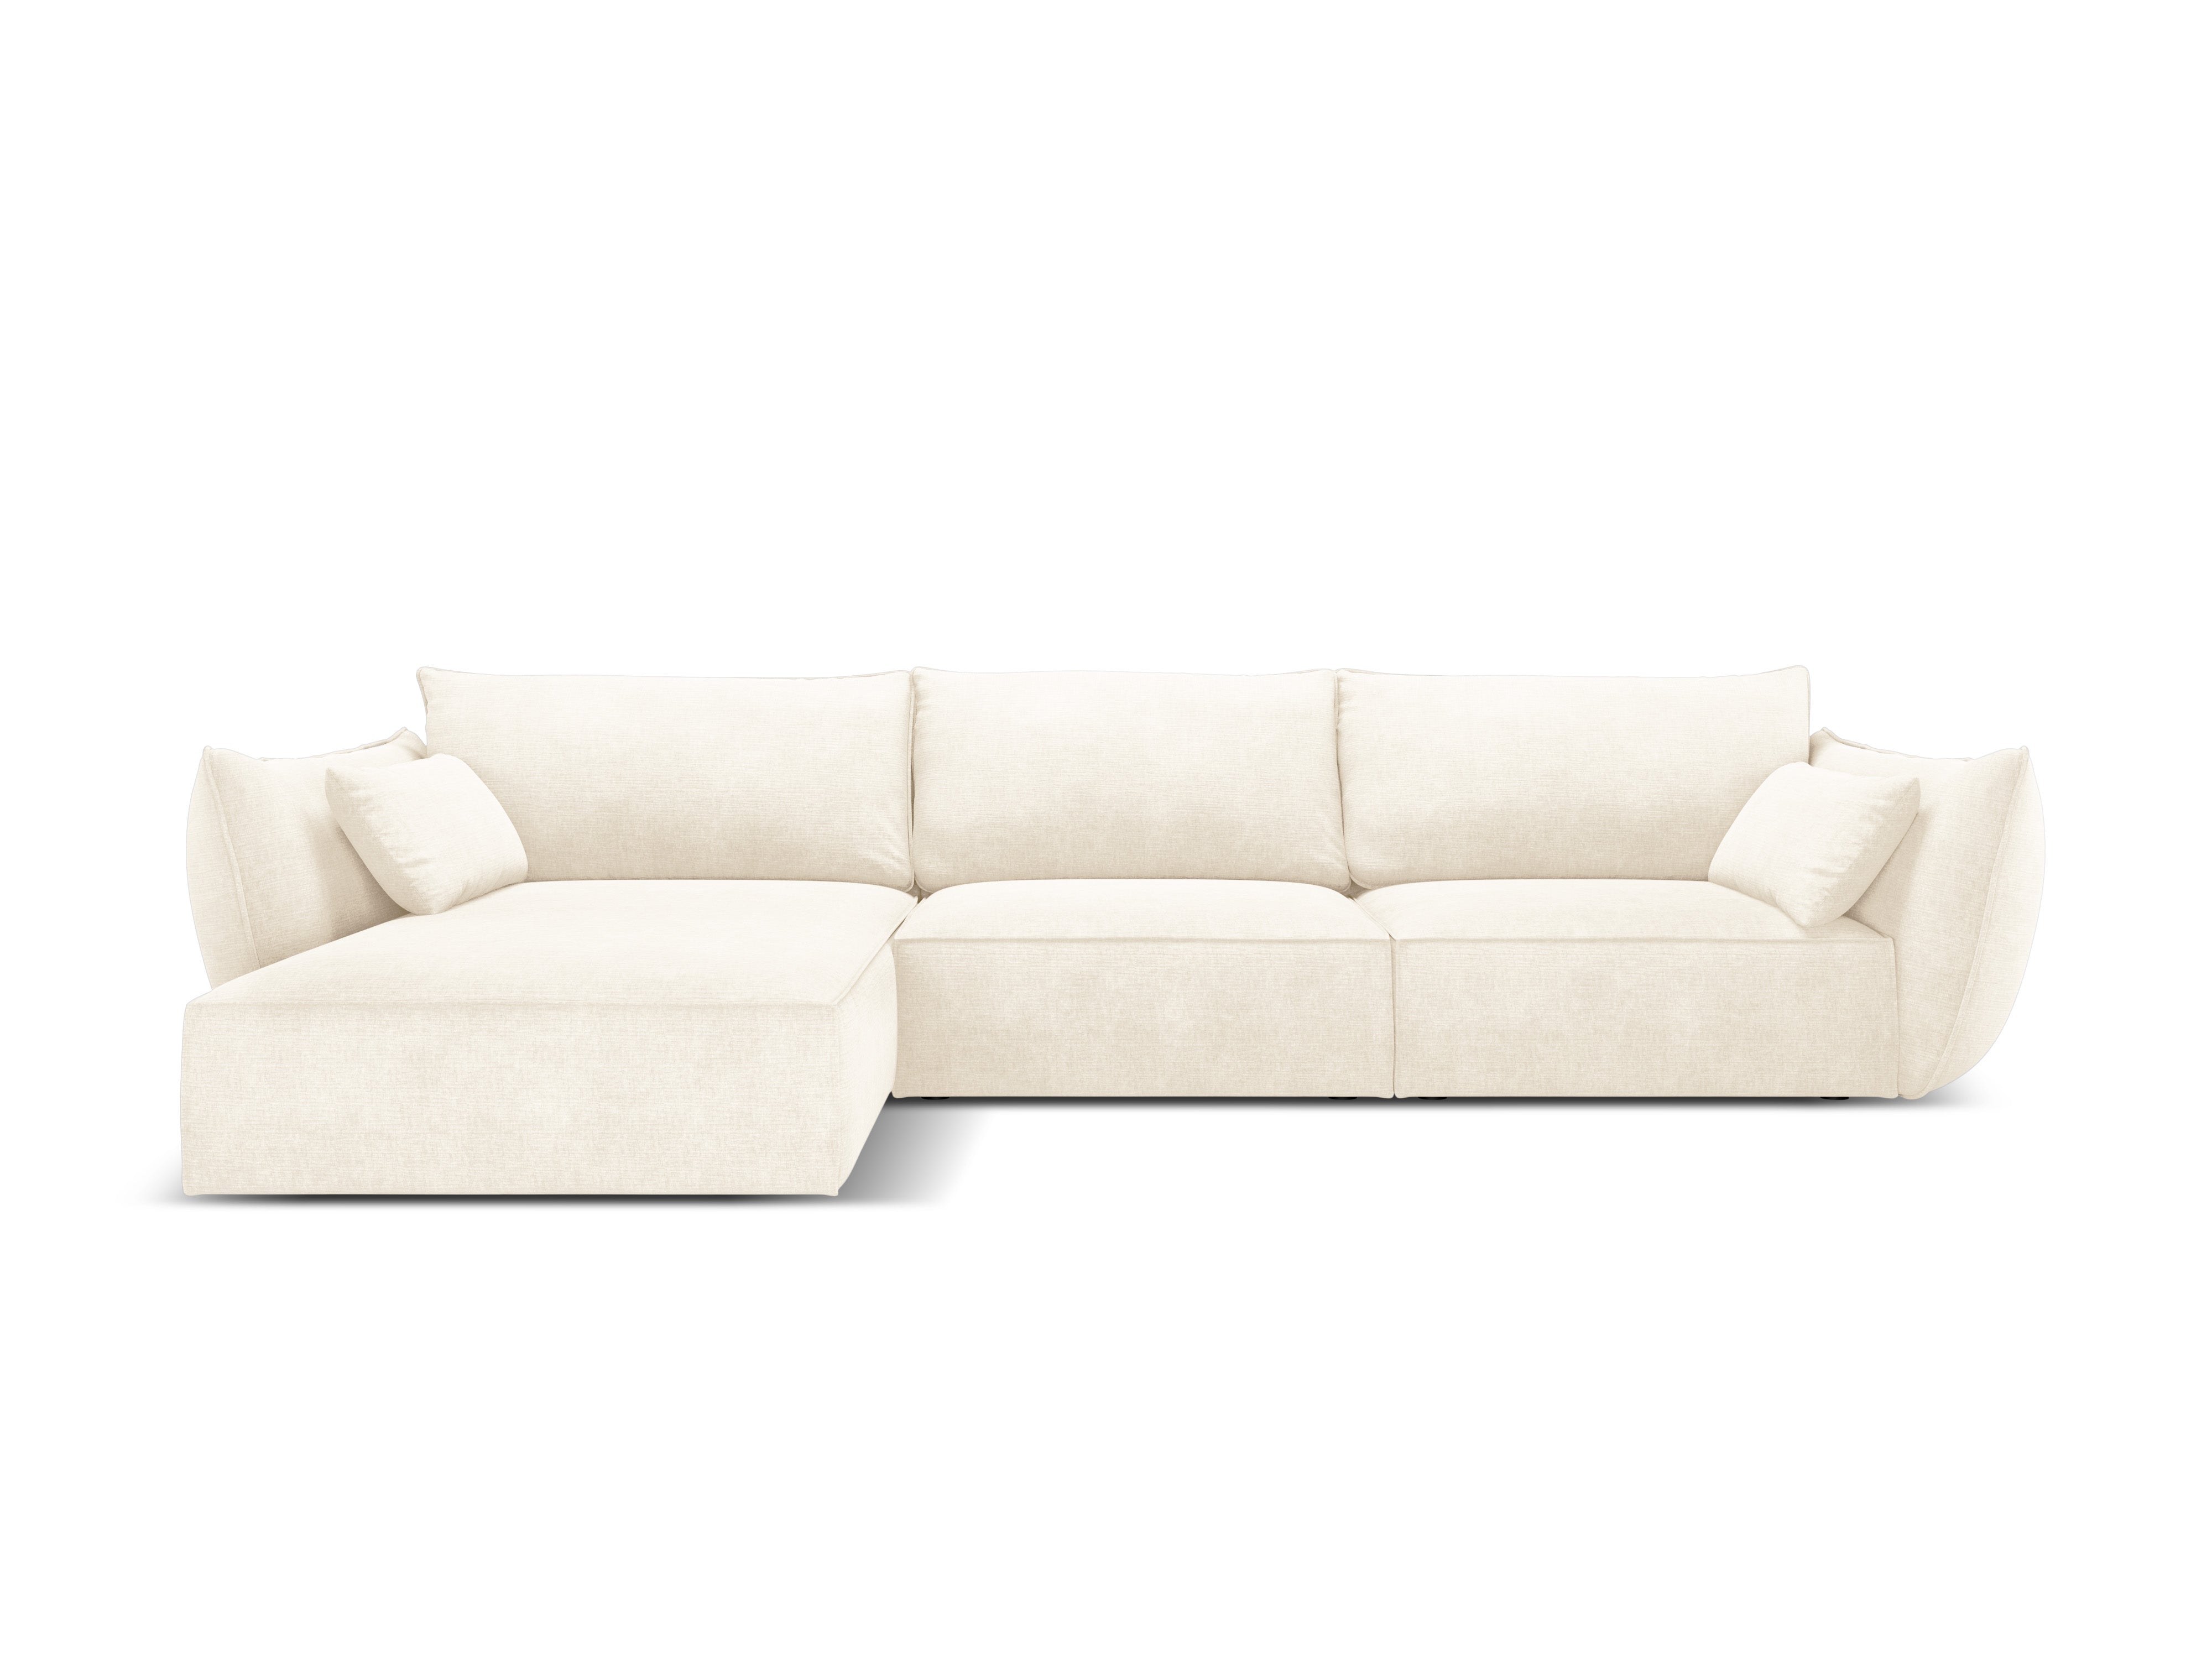 Left Corner Sofa, "Vanda", 4 Seats, 300x166x85
Made in Europe, Mazzini Sofas, Eye on Design